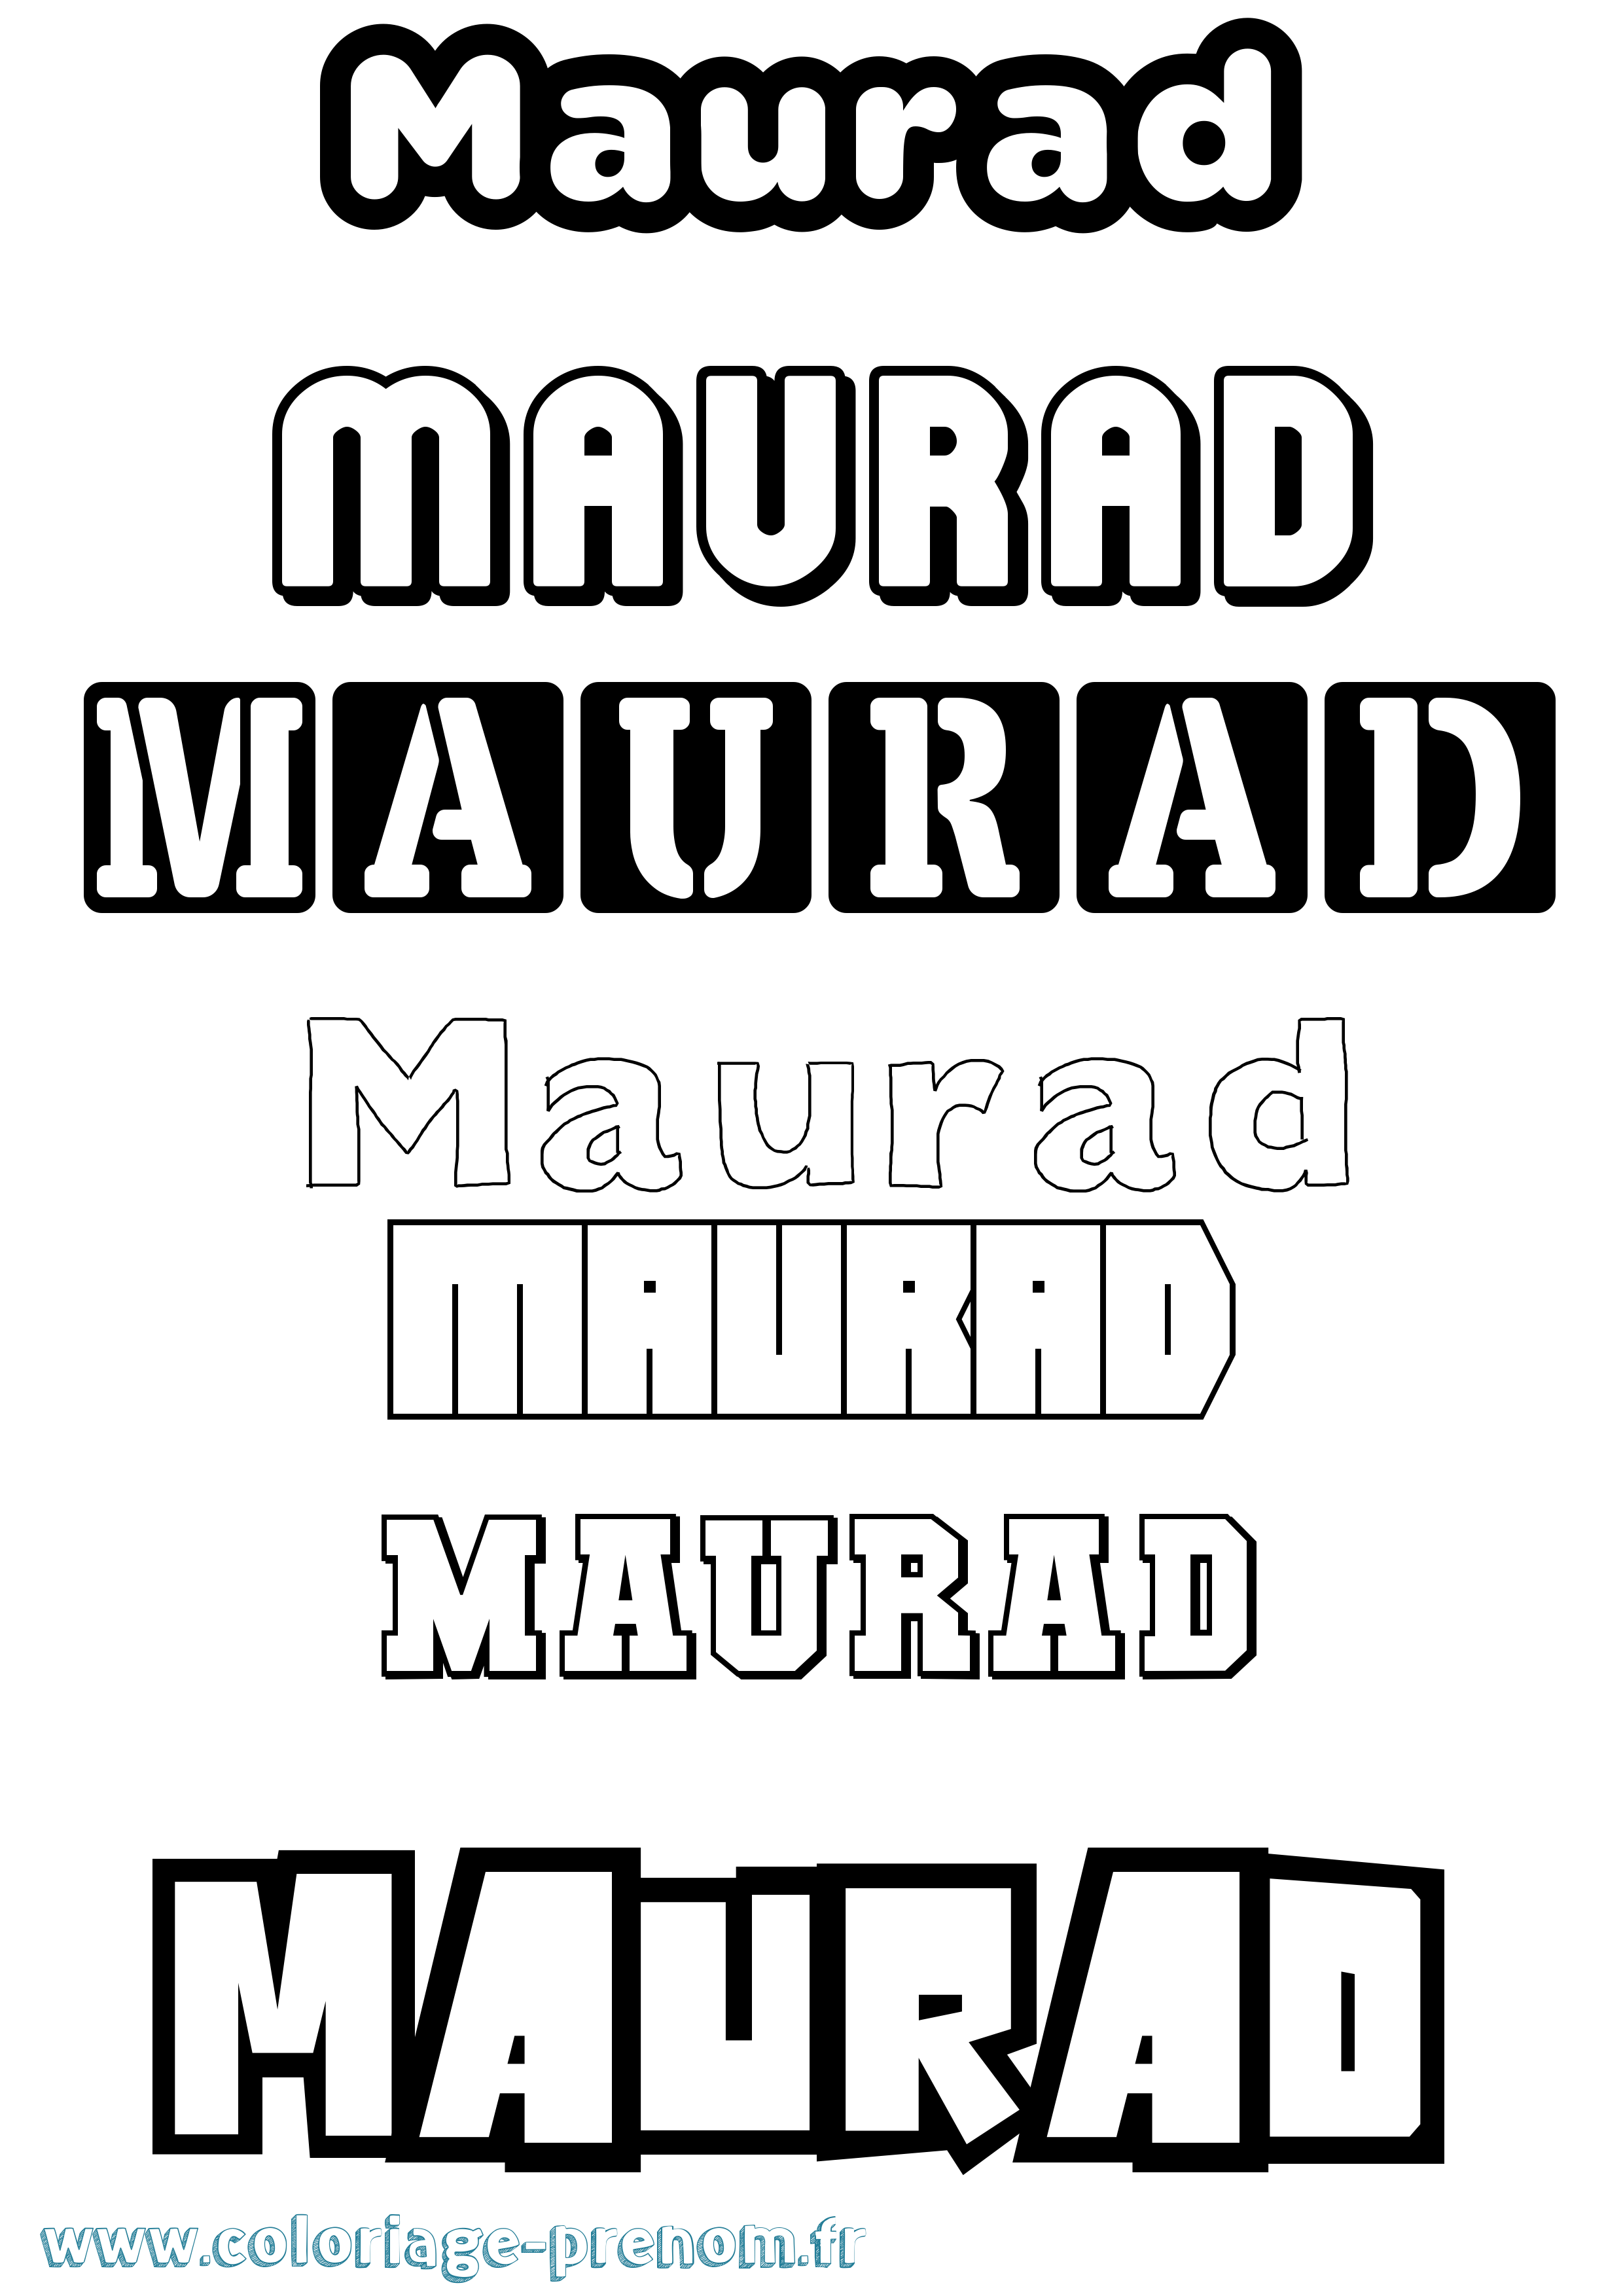 Coloriage prénom Maurad Simple